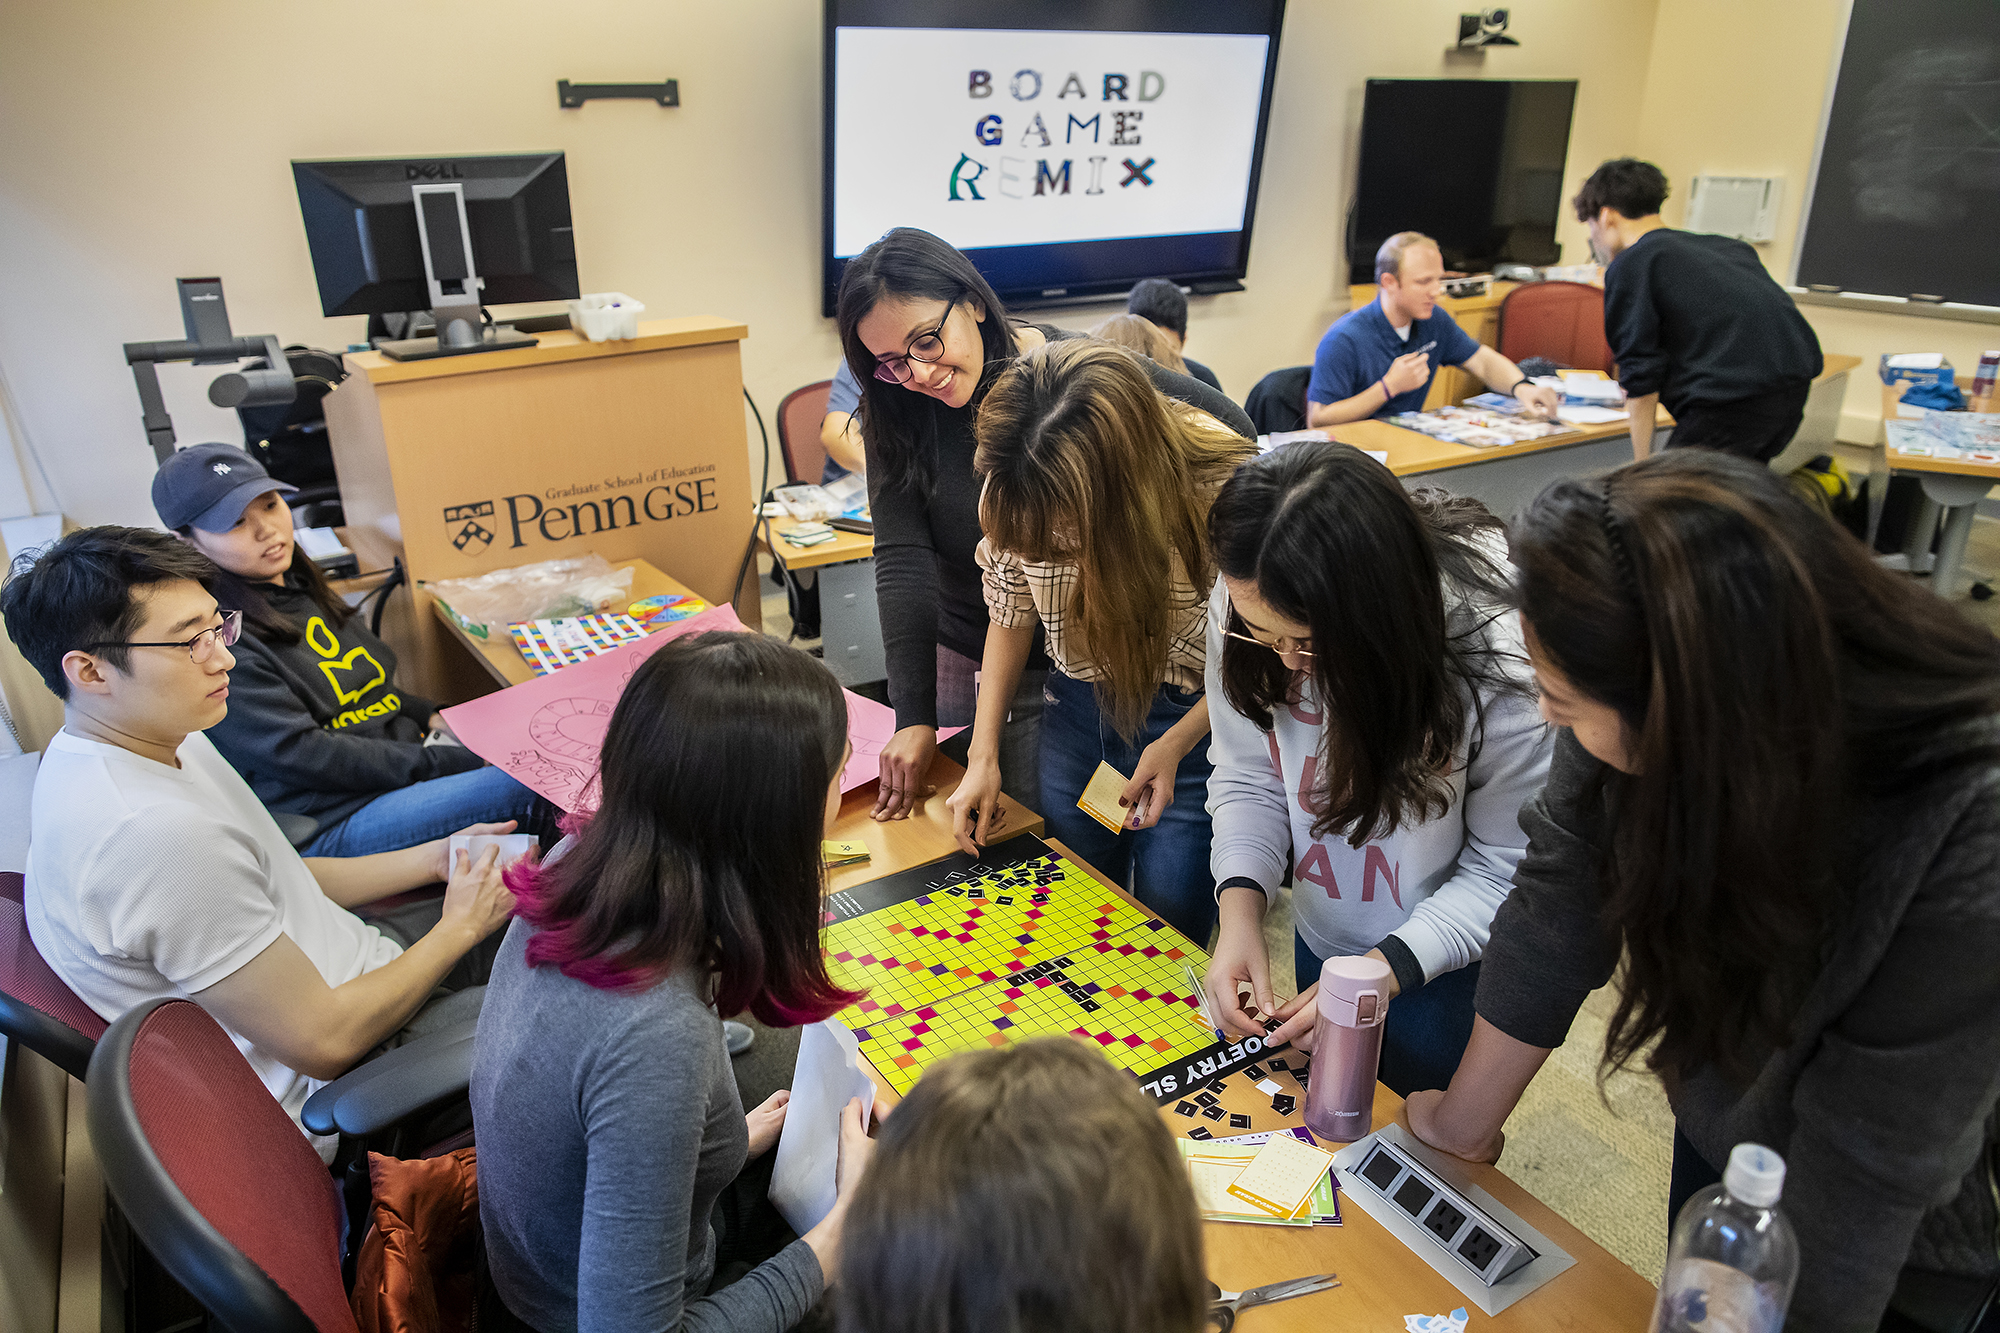 Students gather around board games